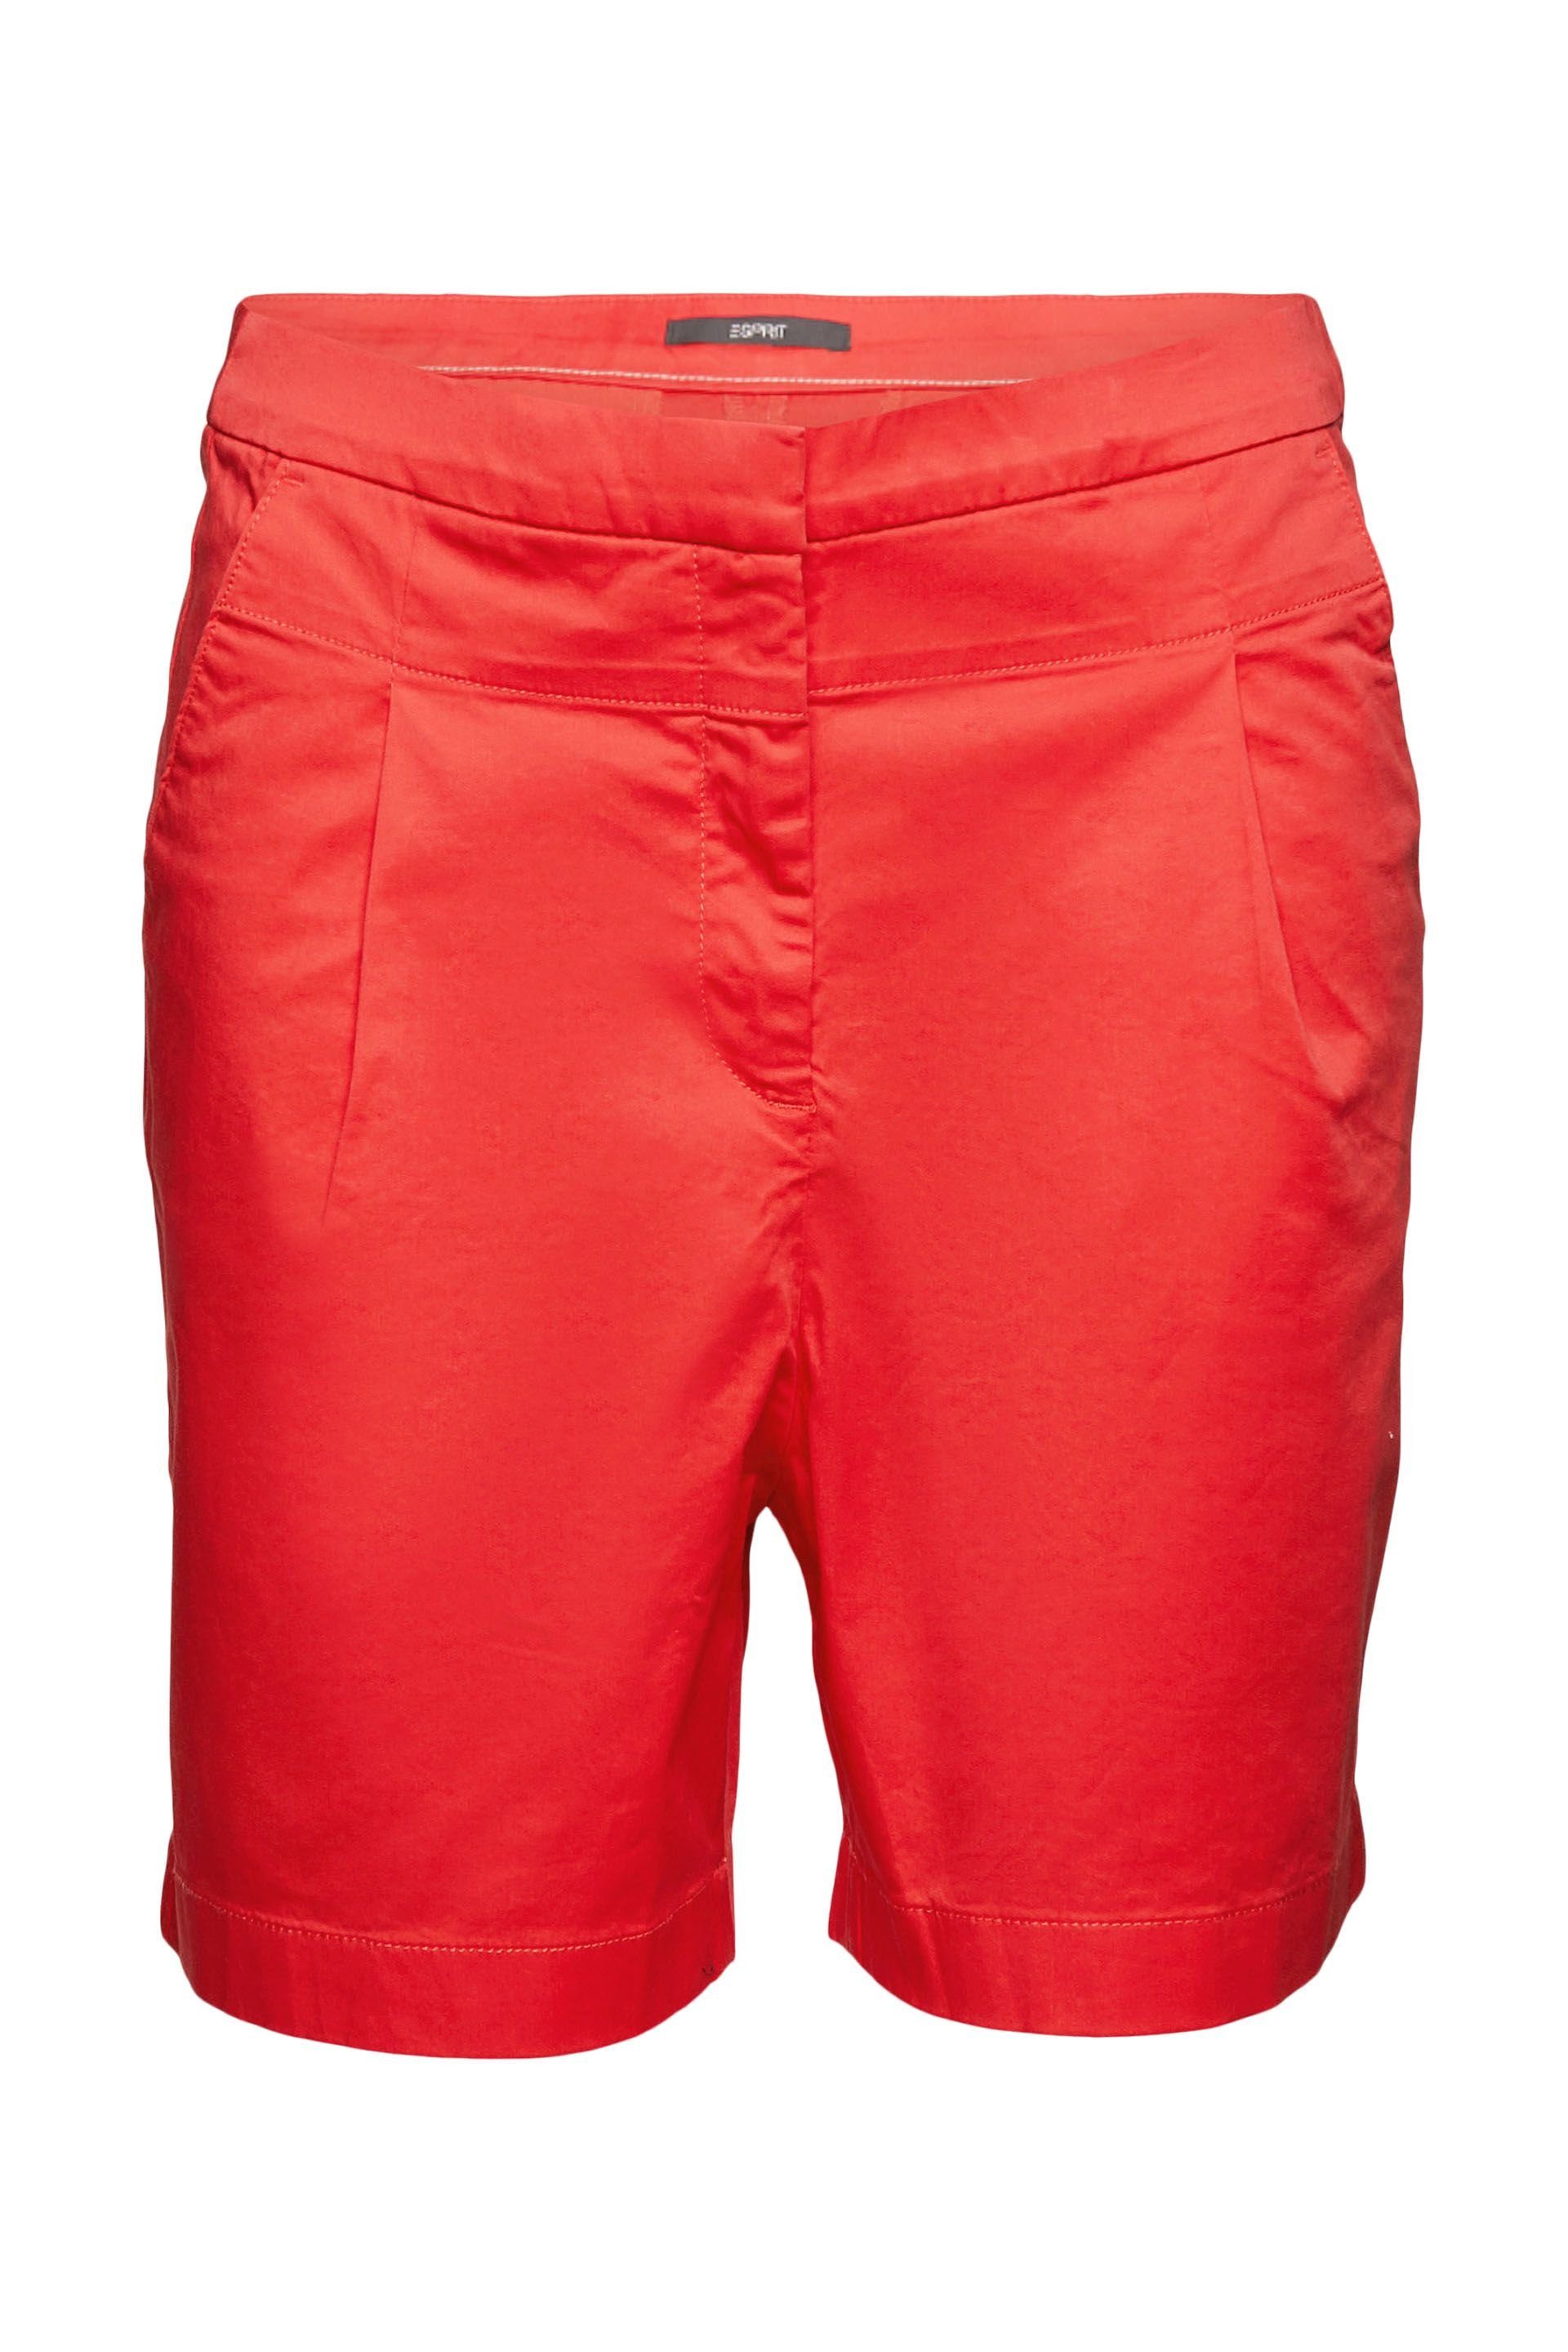 red Shorts Esprit Shorts